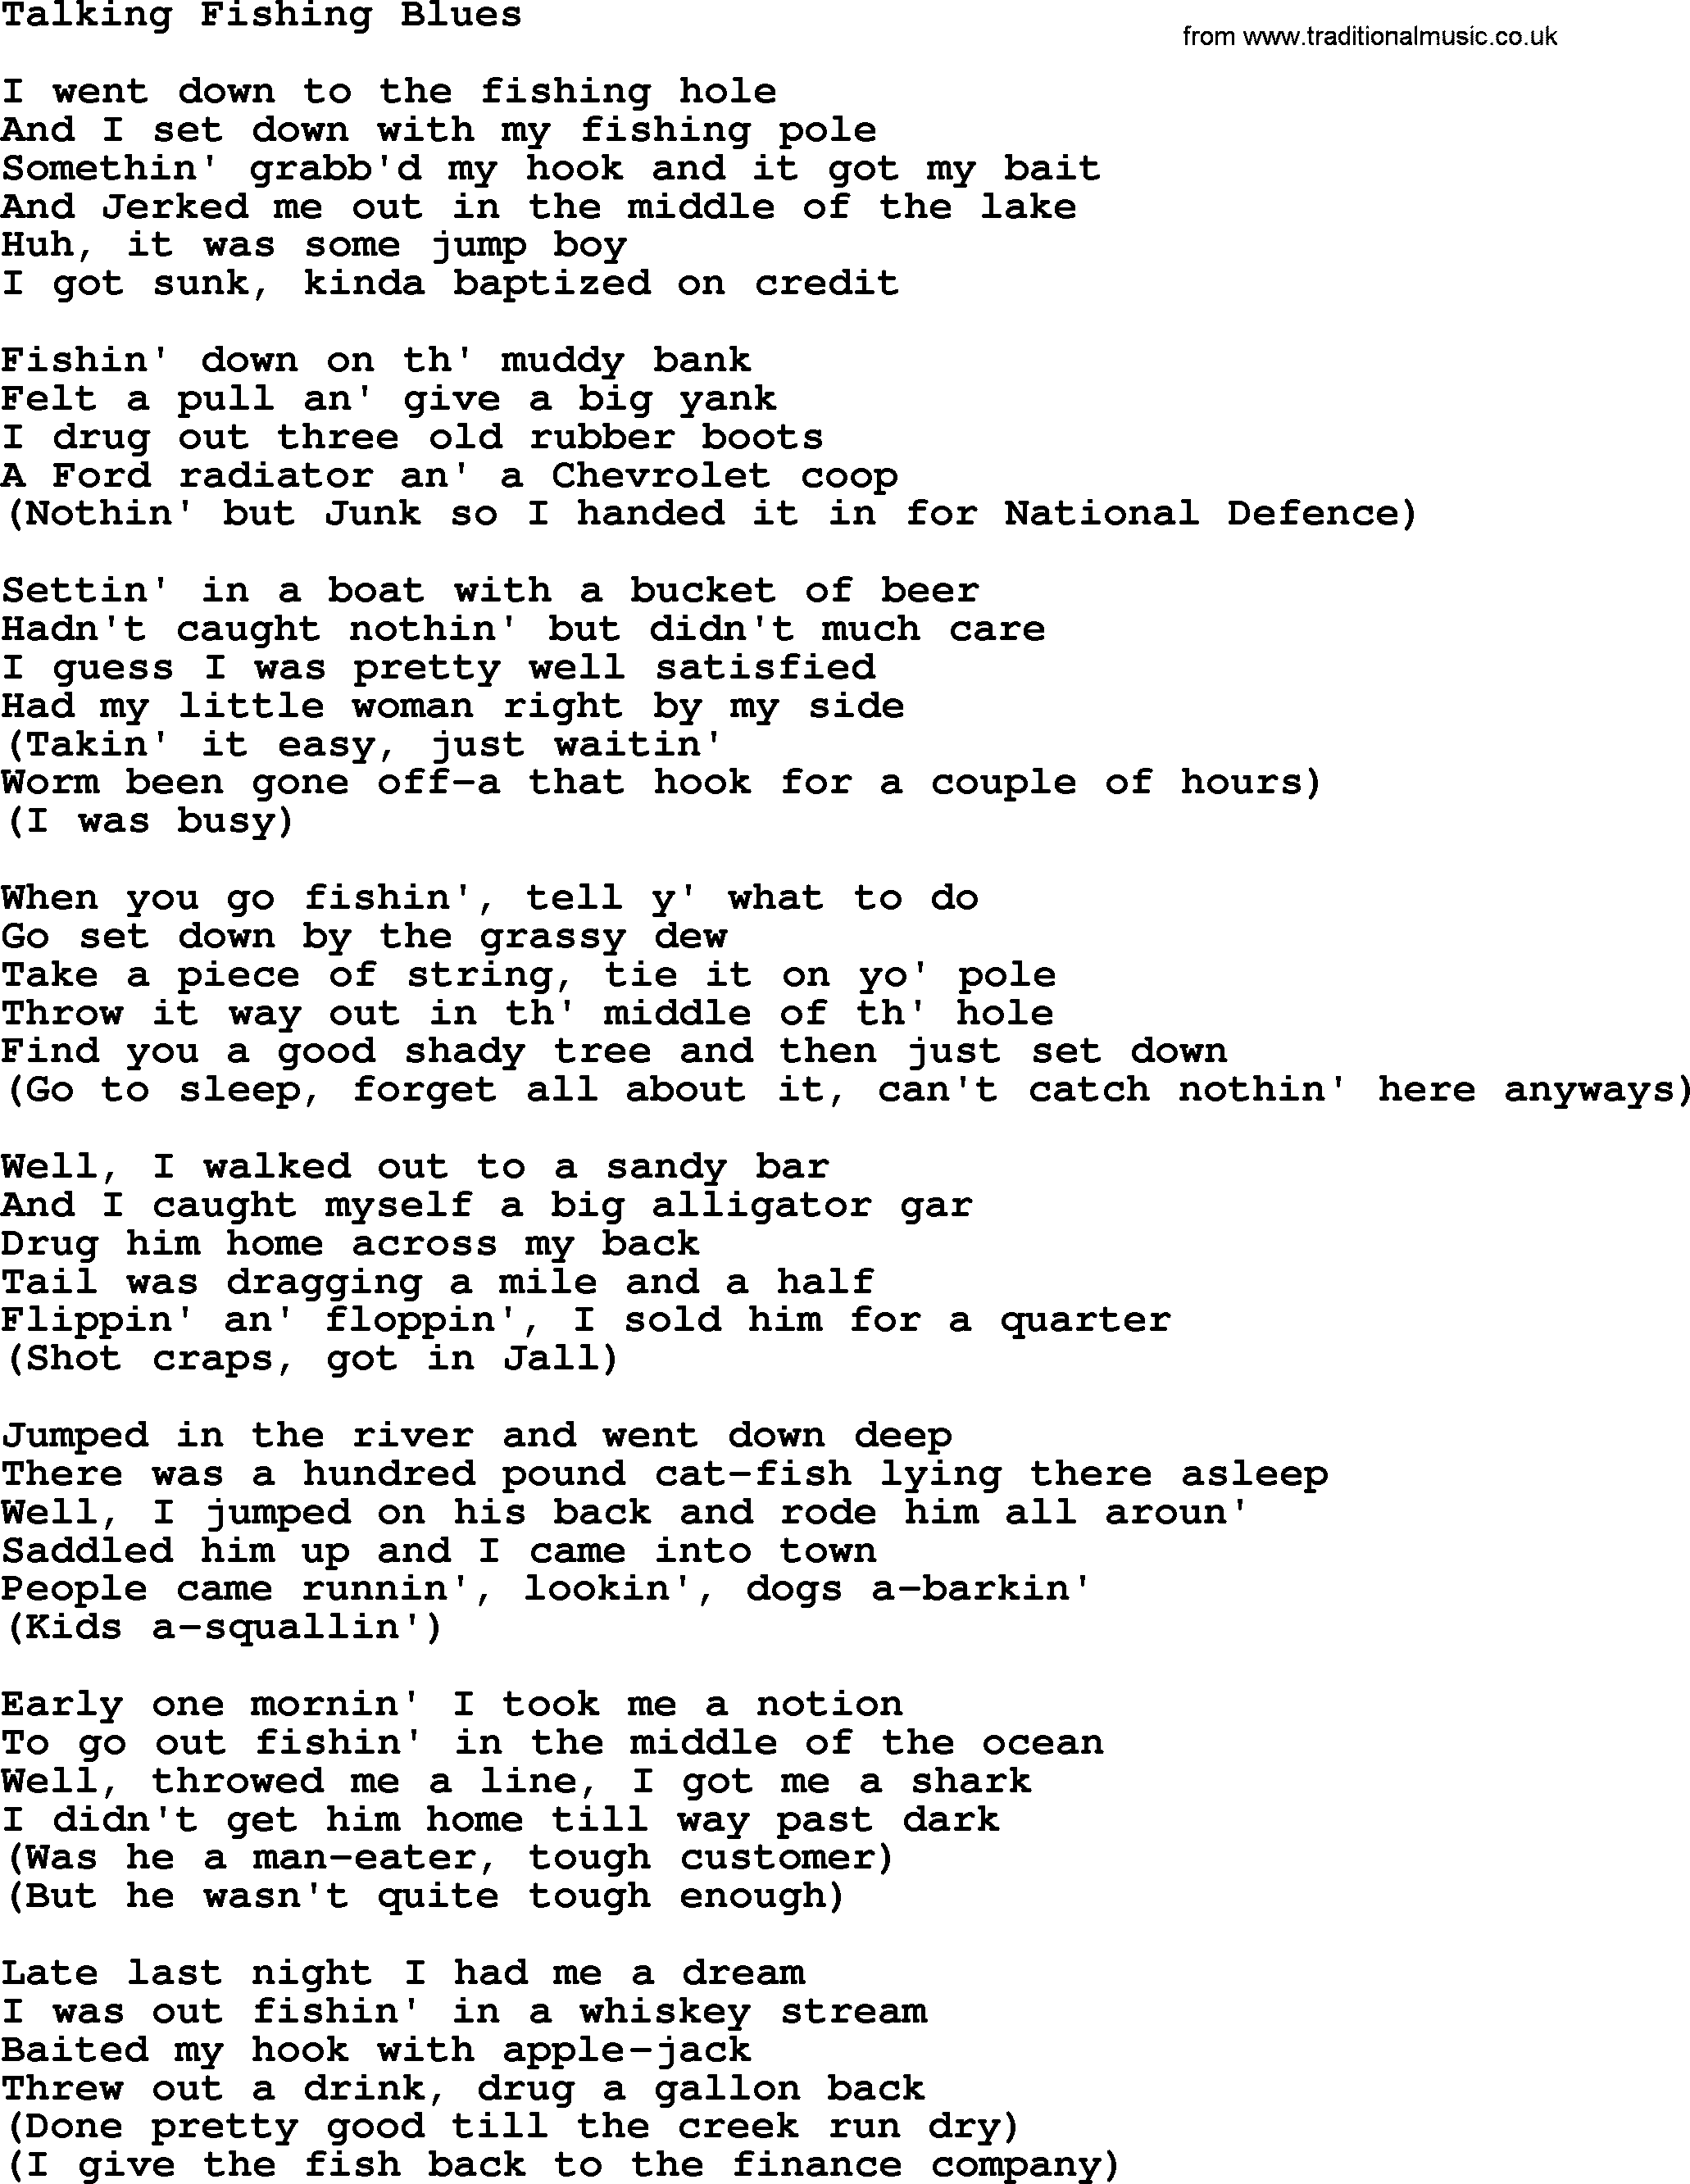 Woody Guthrie song Talking Fishing Blues lyrics